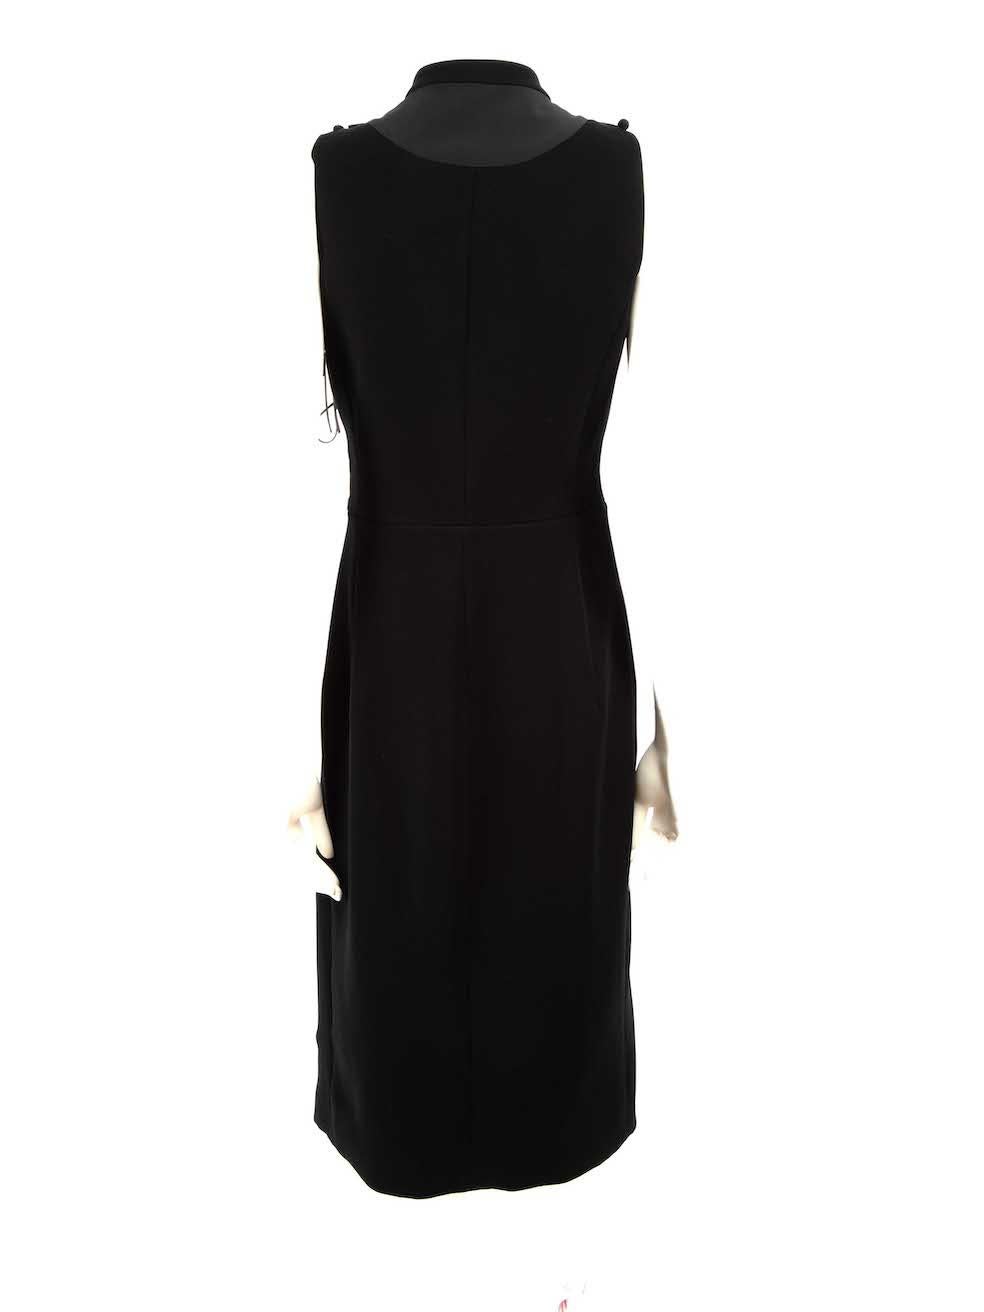 Altuzarra Black Tie Bow Accent Midi Dress Size L In Excellent Condition For Sale In London, GB